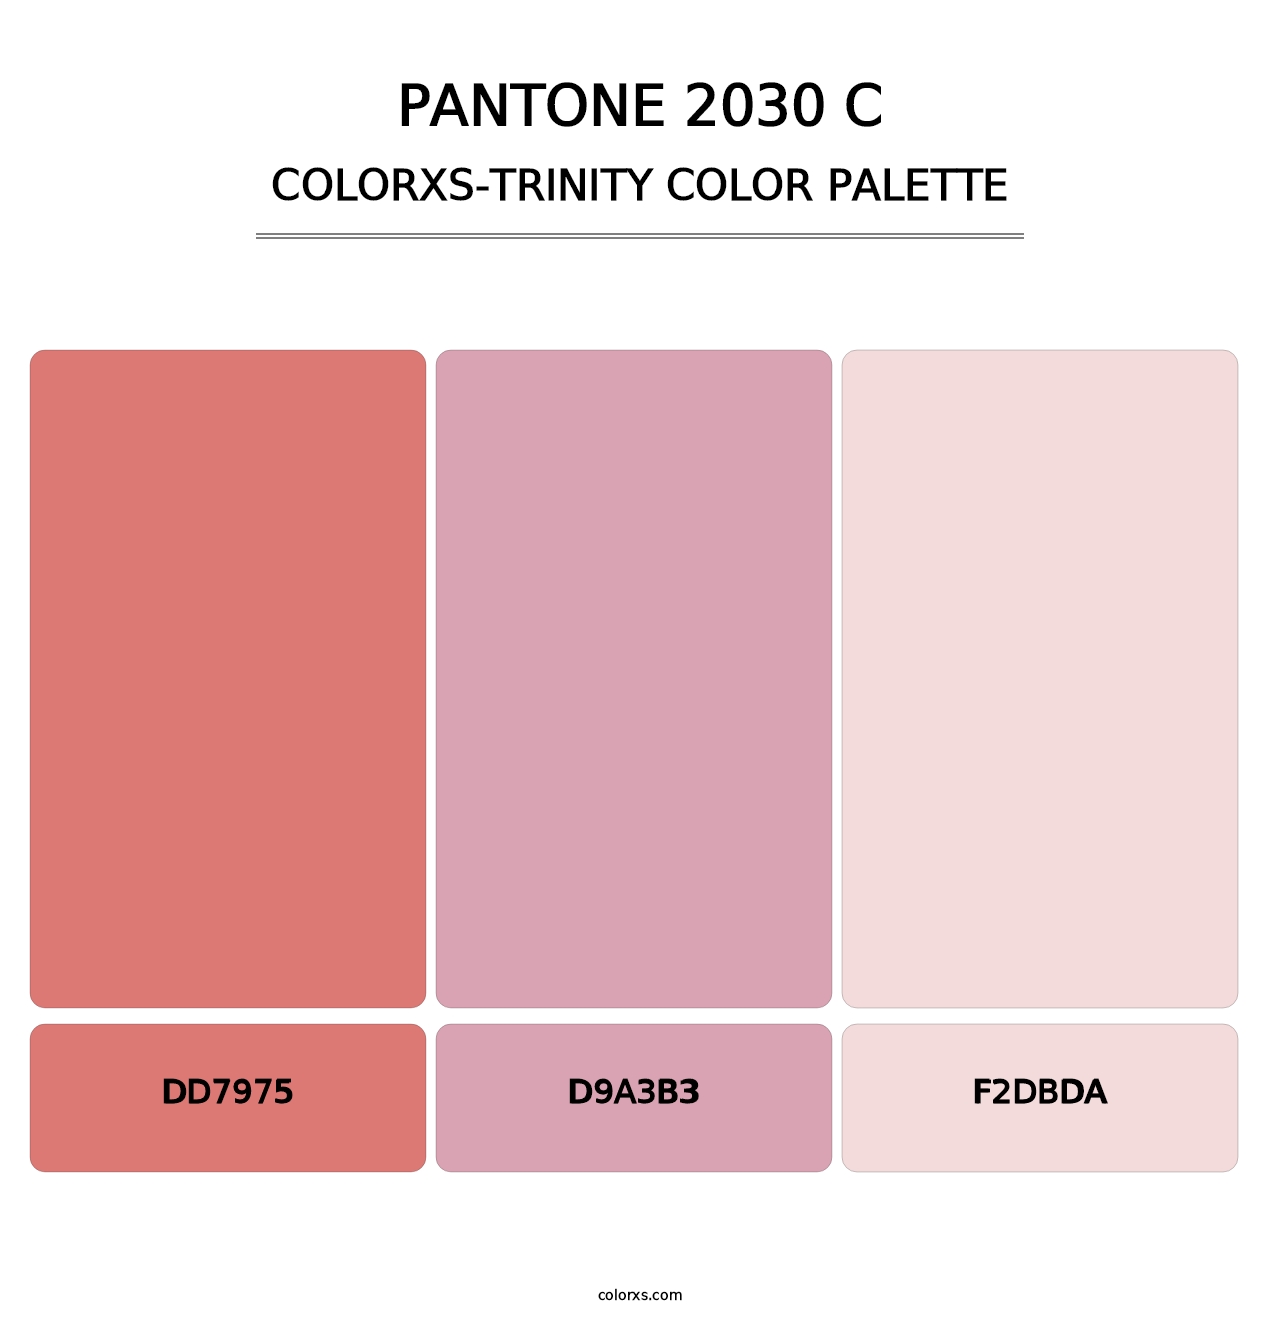 PANTONE 2030 C - Colorxs Trinity Palette